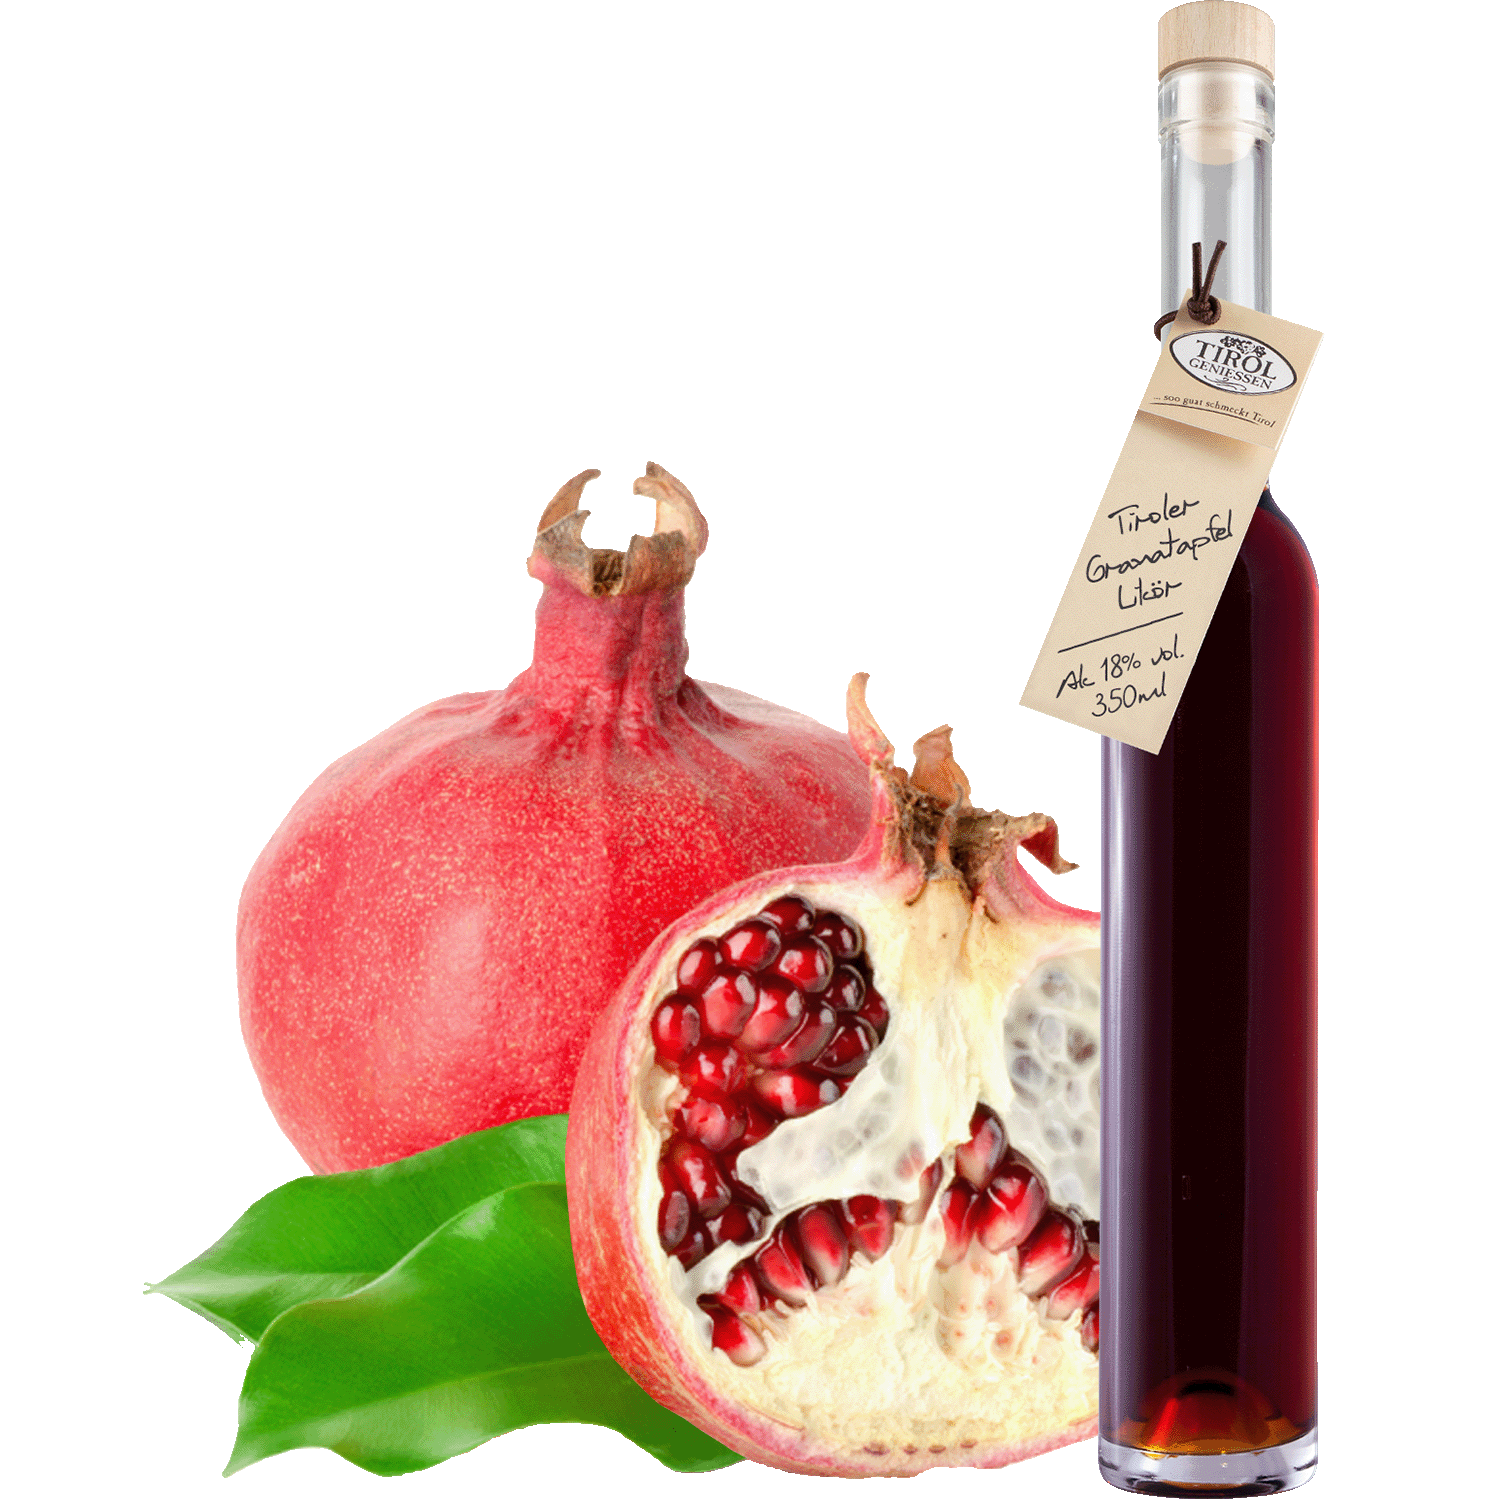 Pomegranate Liqueur in gift bottle from Austria from Tirol Geniessen